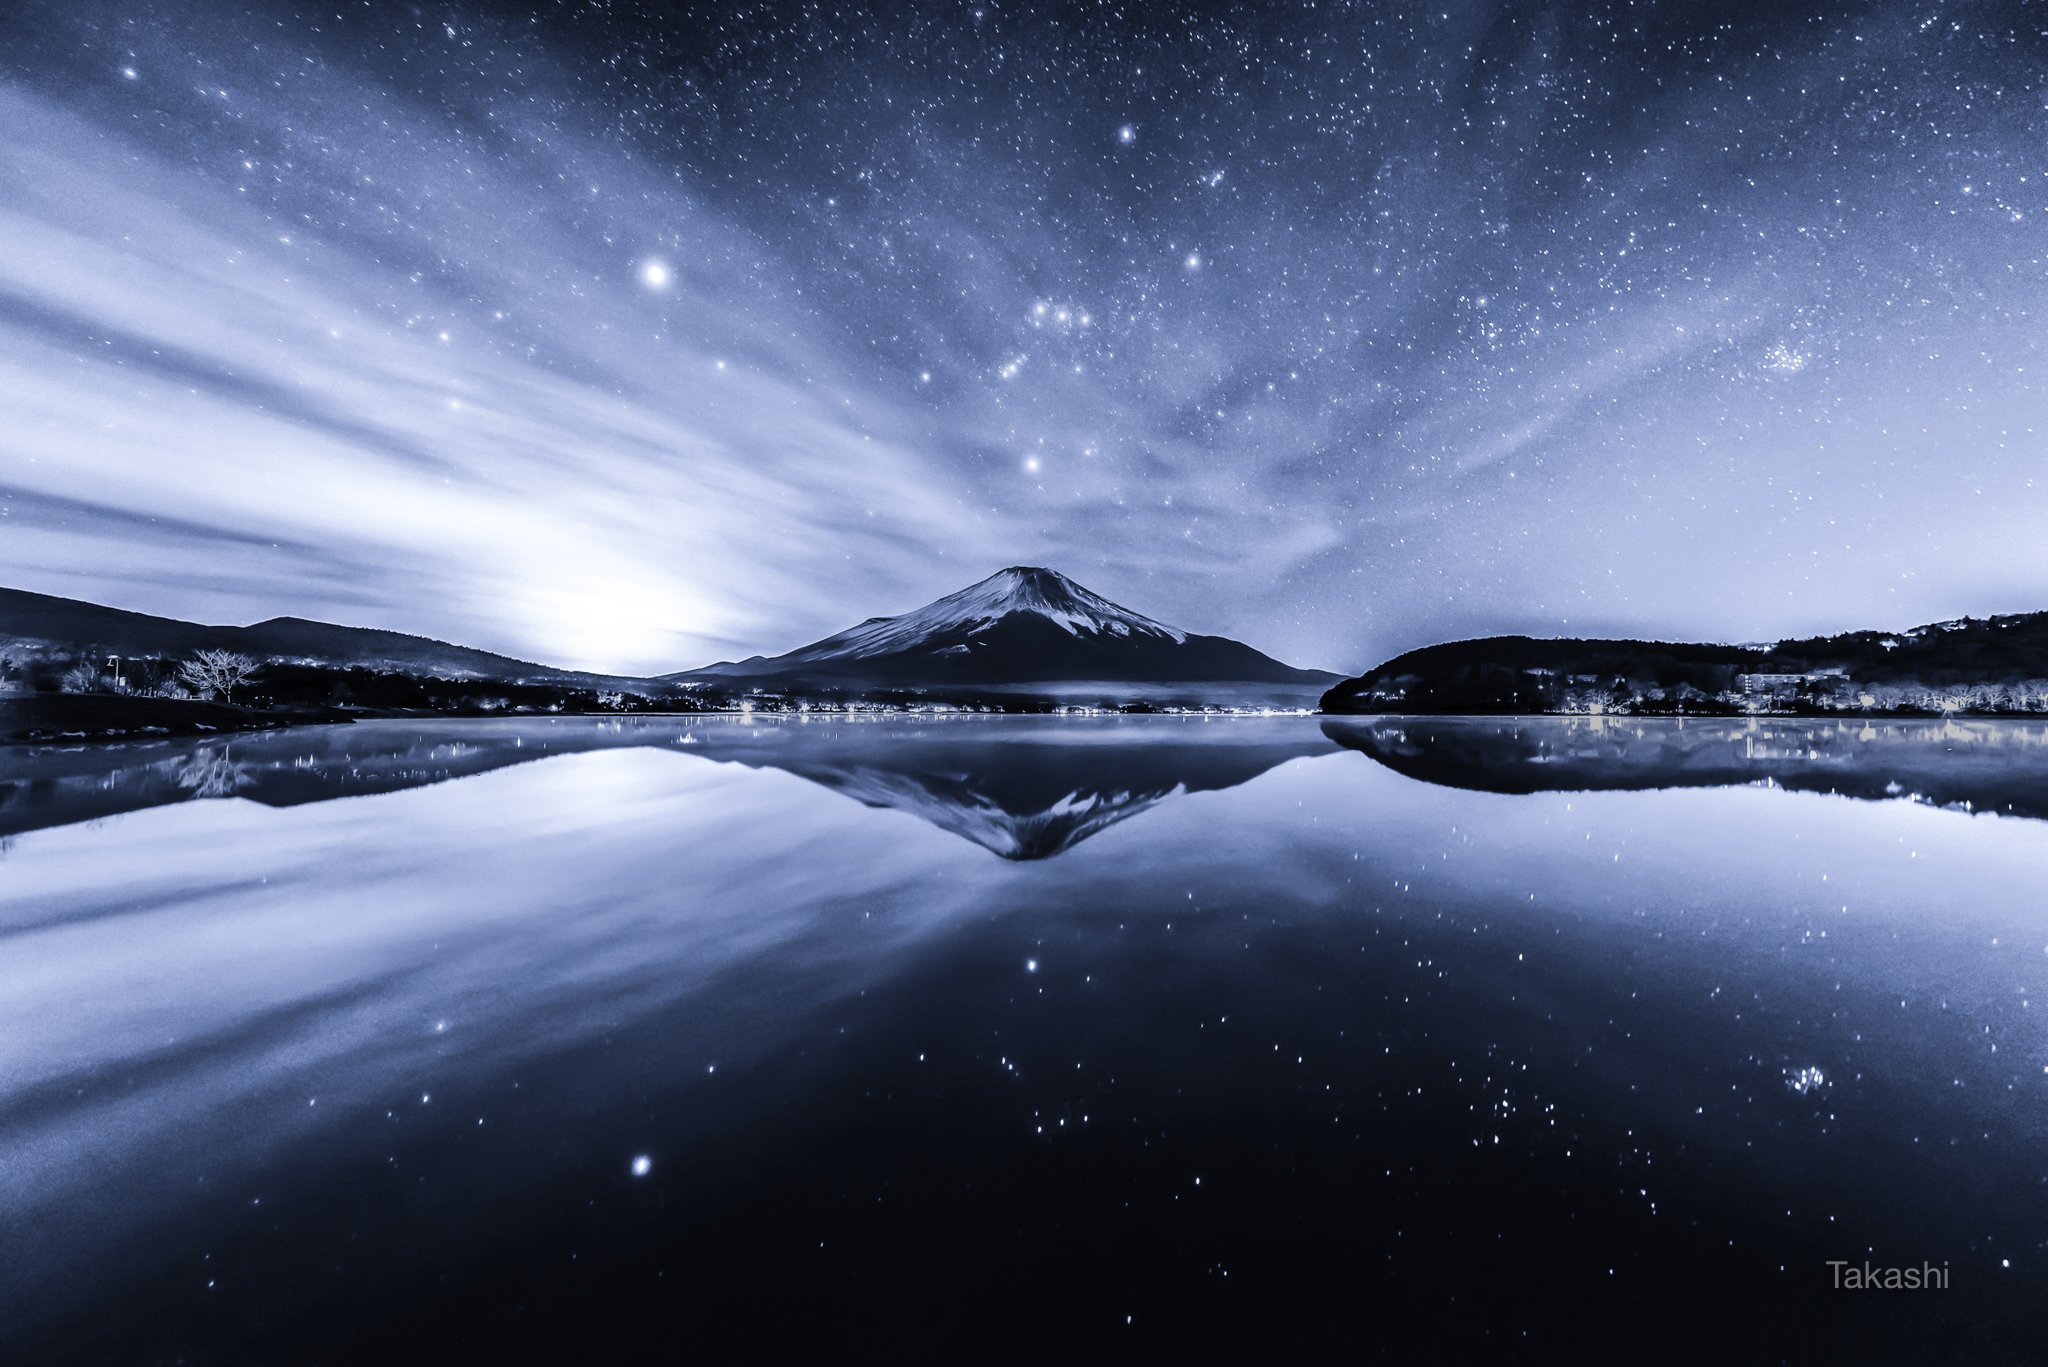 Fuji,mountain,Japan,cloud,lake,water,reflection,star,orion,beautiful,fantastic,amazing,bye,sky, Takashi